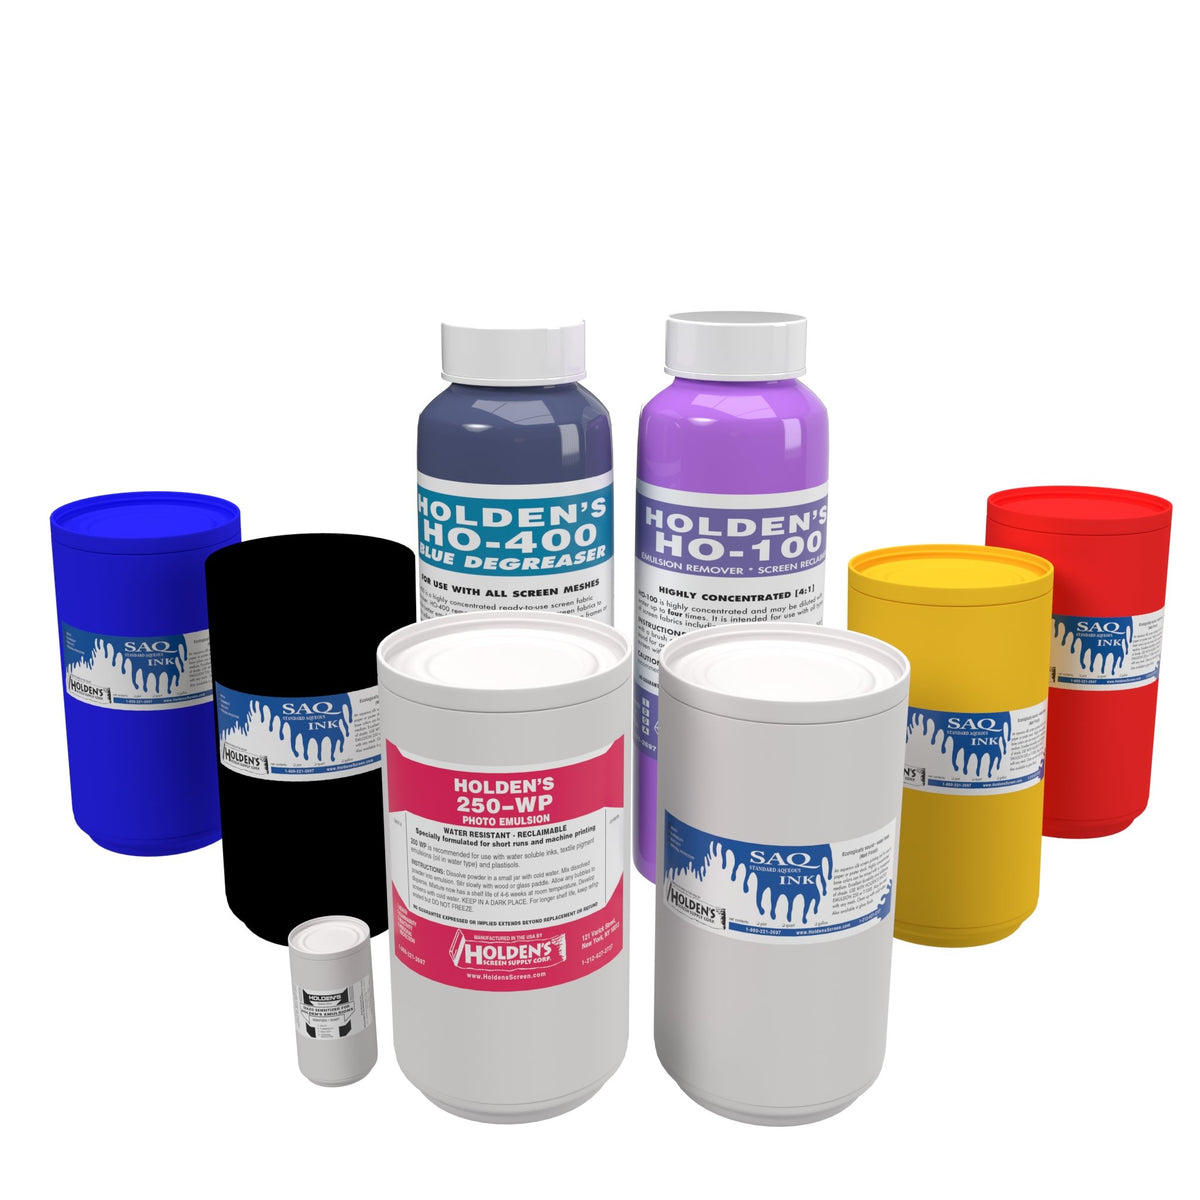 VPR Photo Emulsion, Screen Printing Supplies